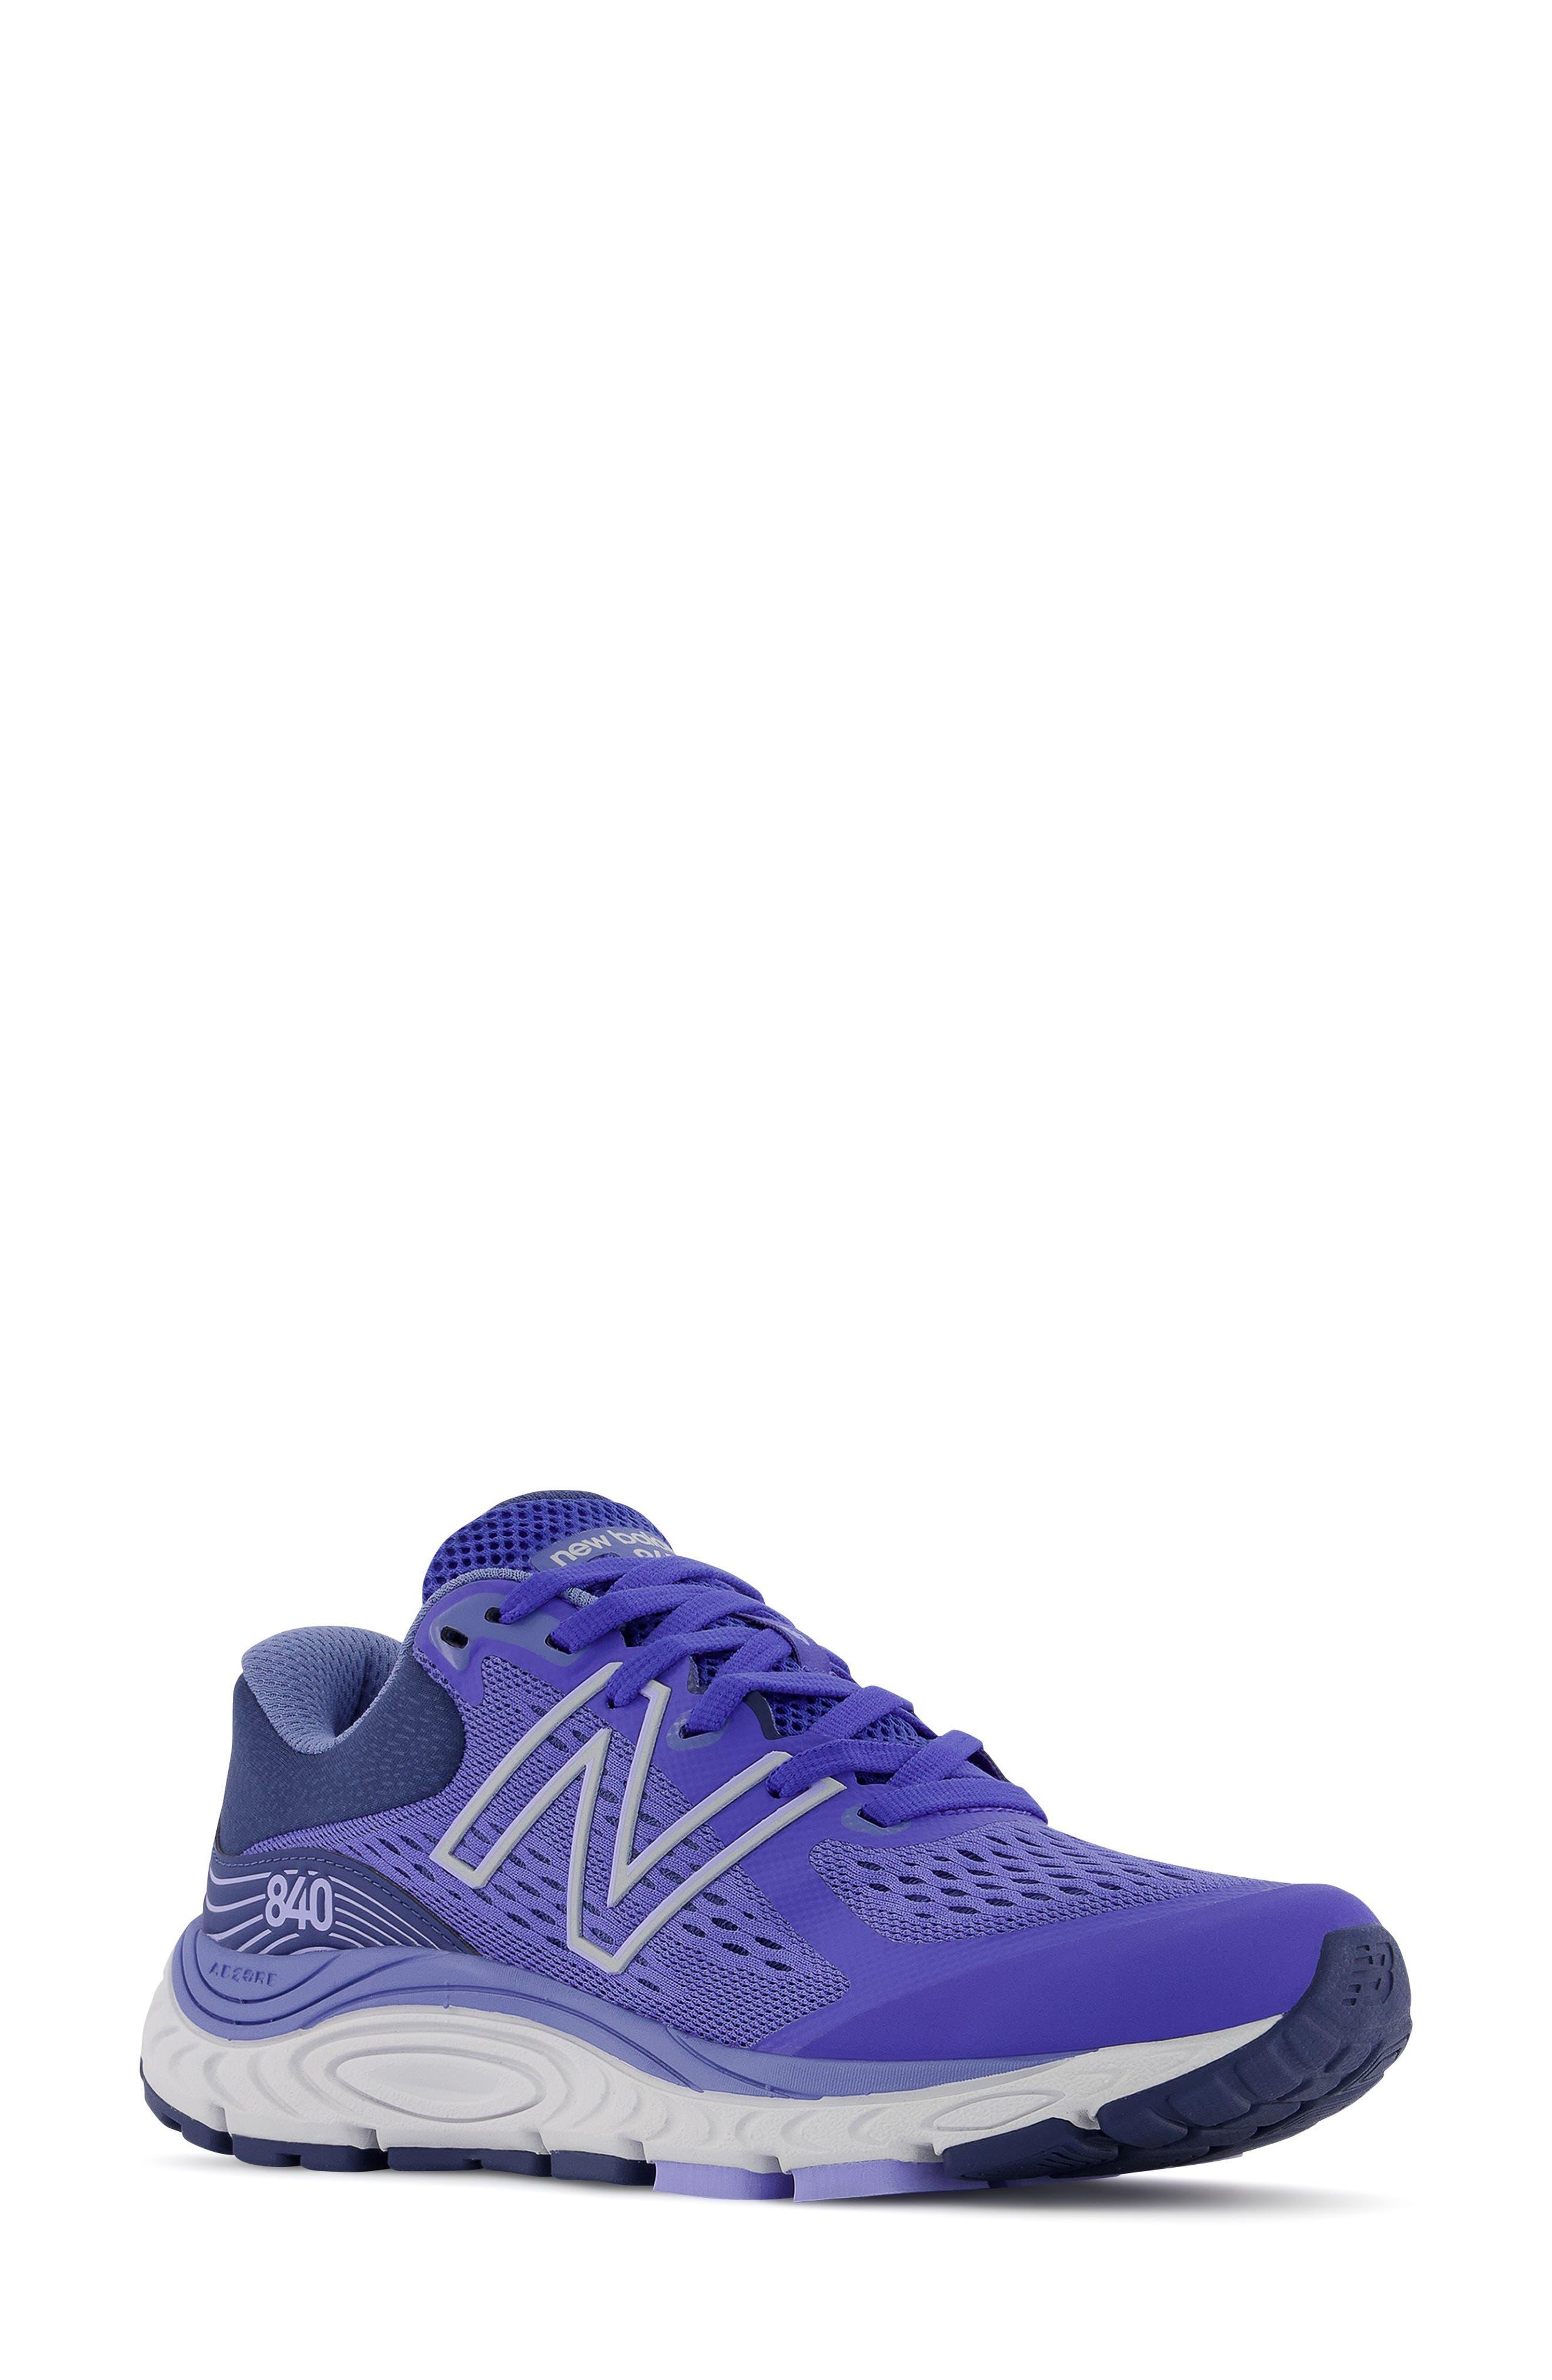 New Balance 840 Running Shoe in Purple | Lyst